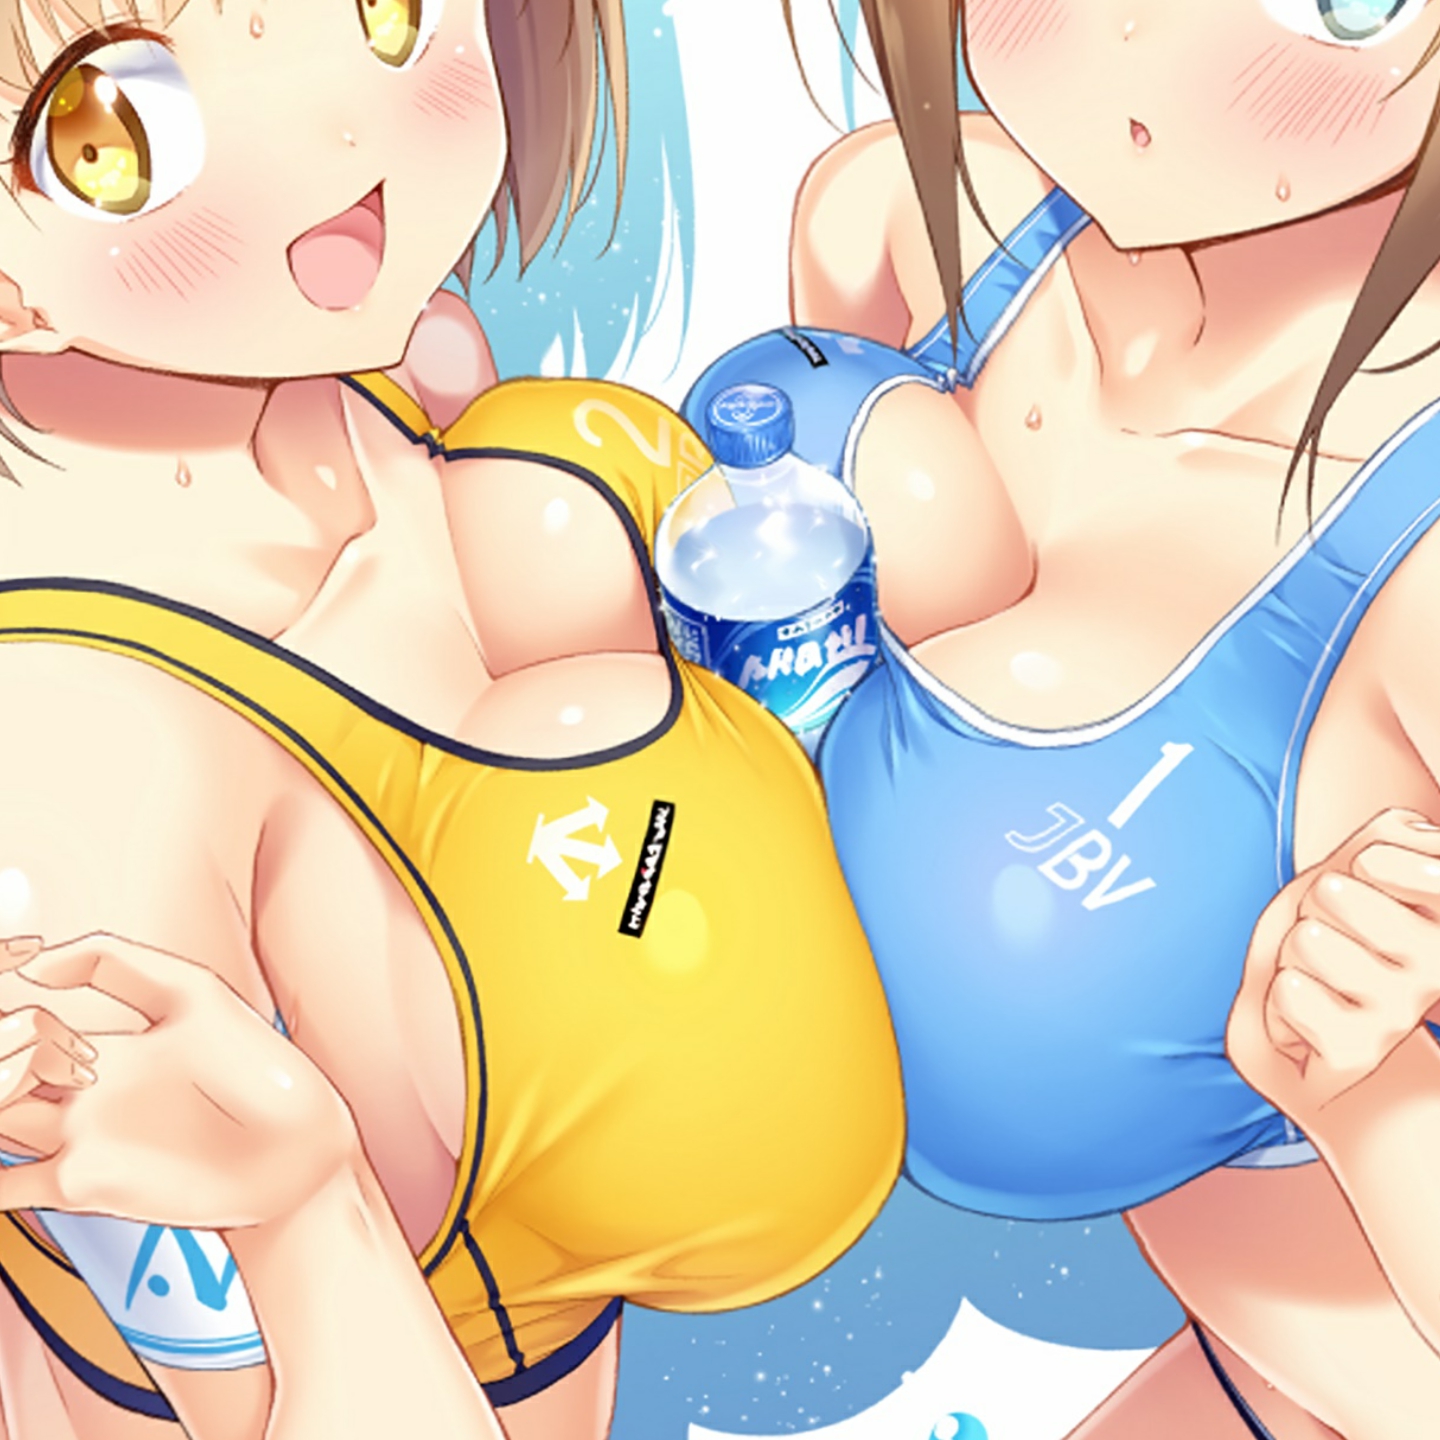 Beach Volleyball Girls [2160 x 2560]